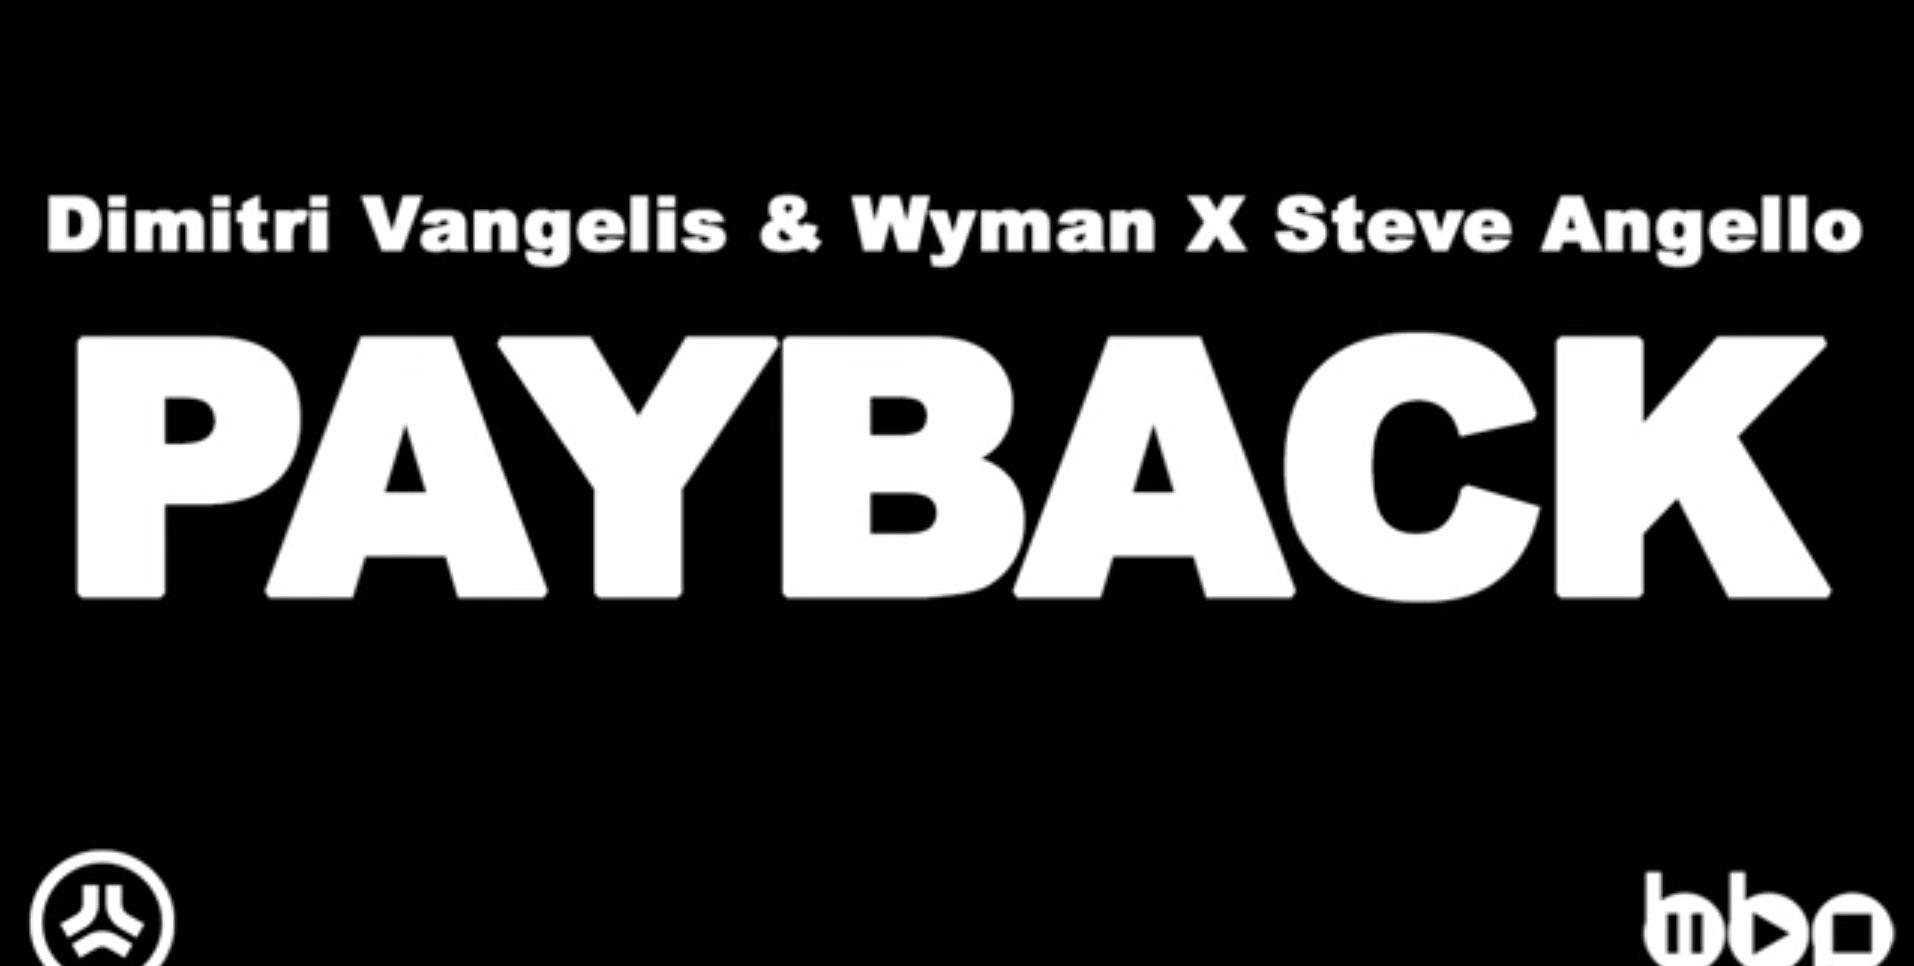 Il  video di Dimitri Vangelis & Wyman X Steve Angello Payback